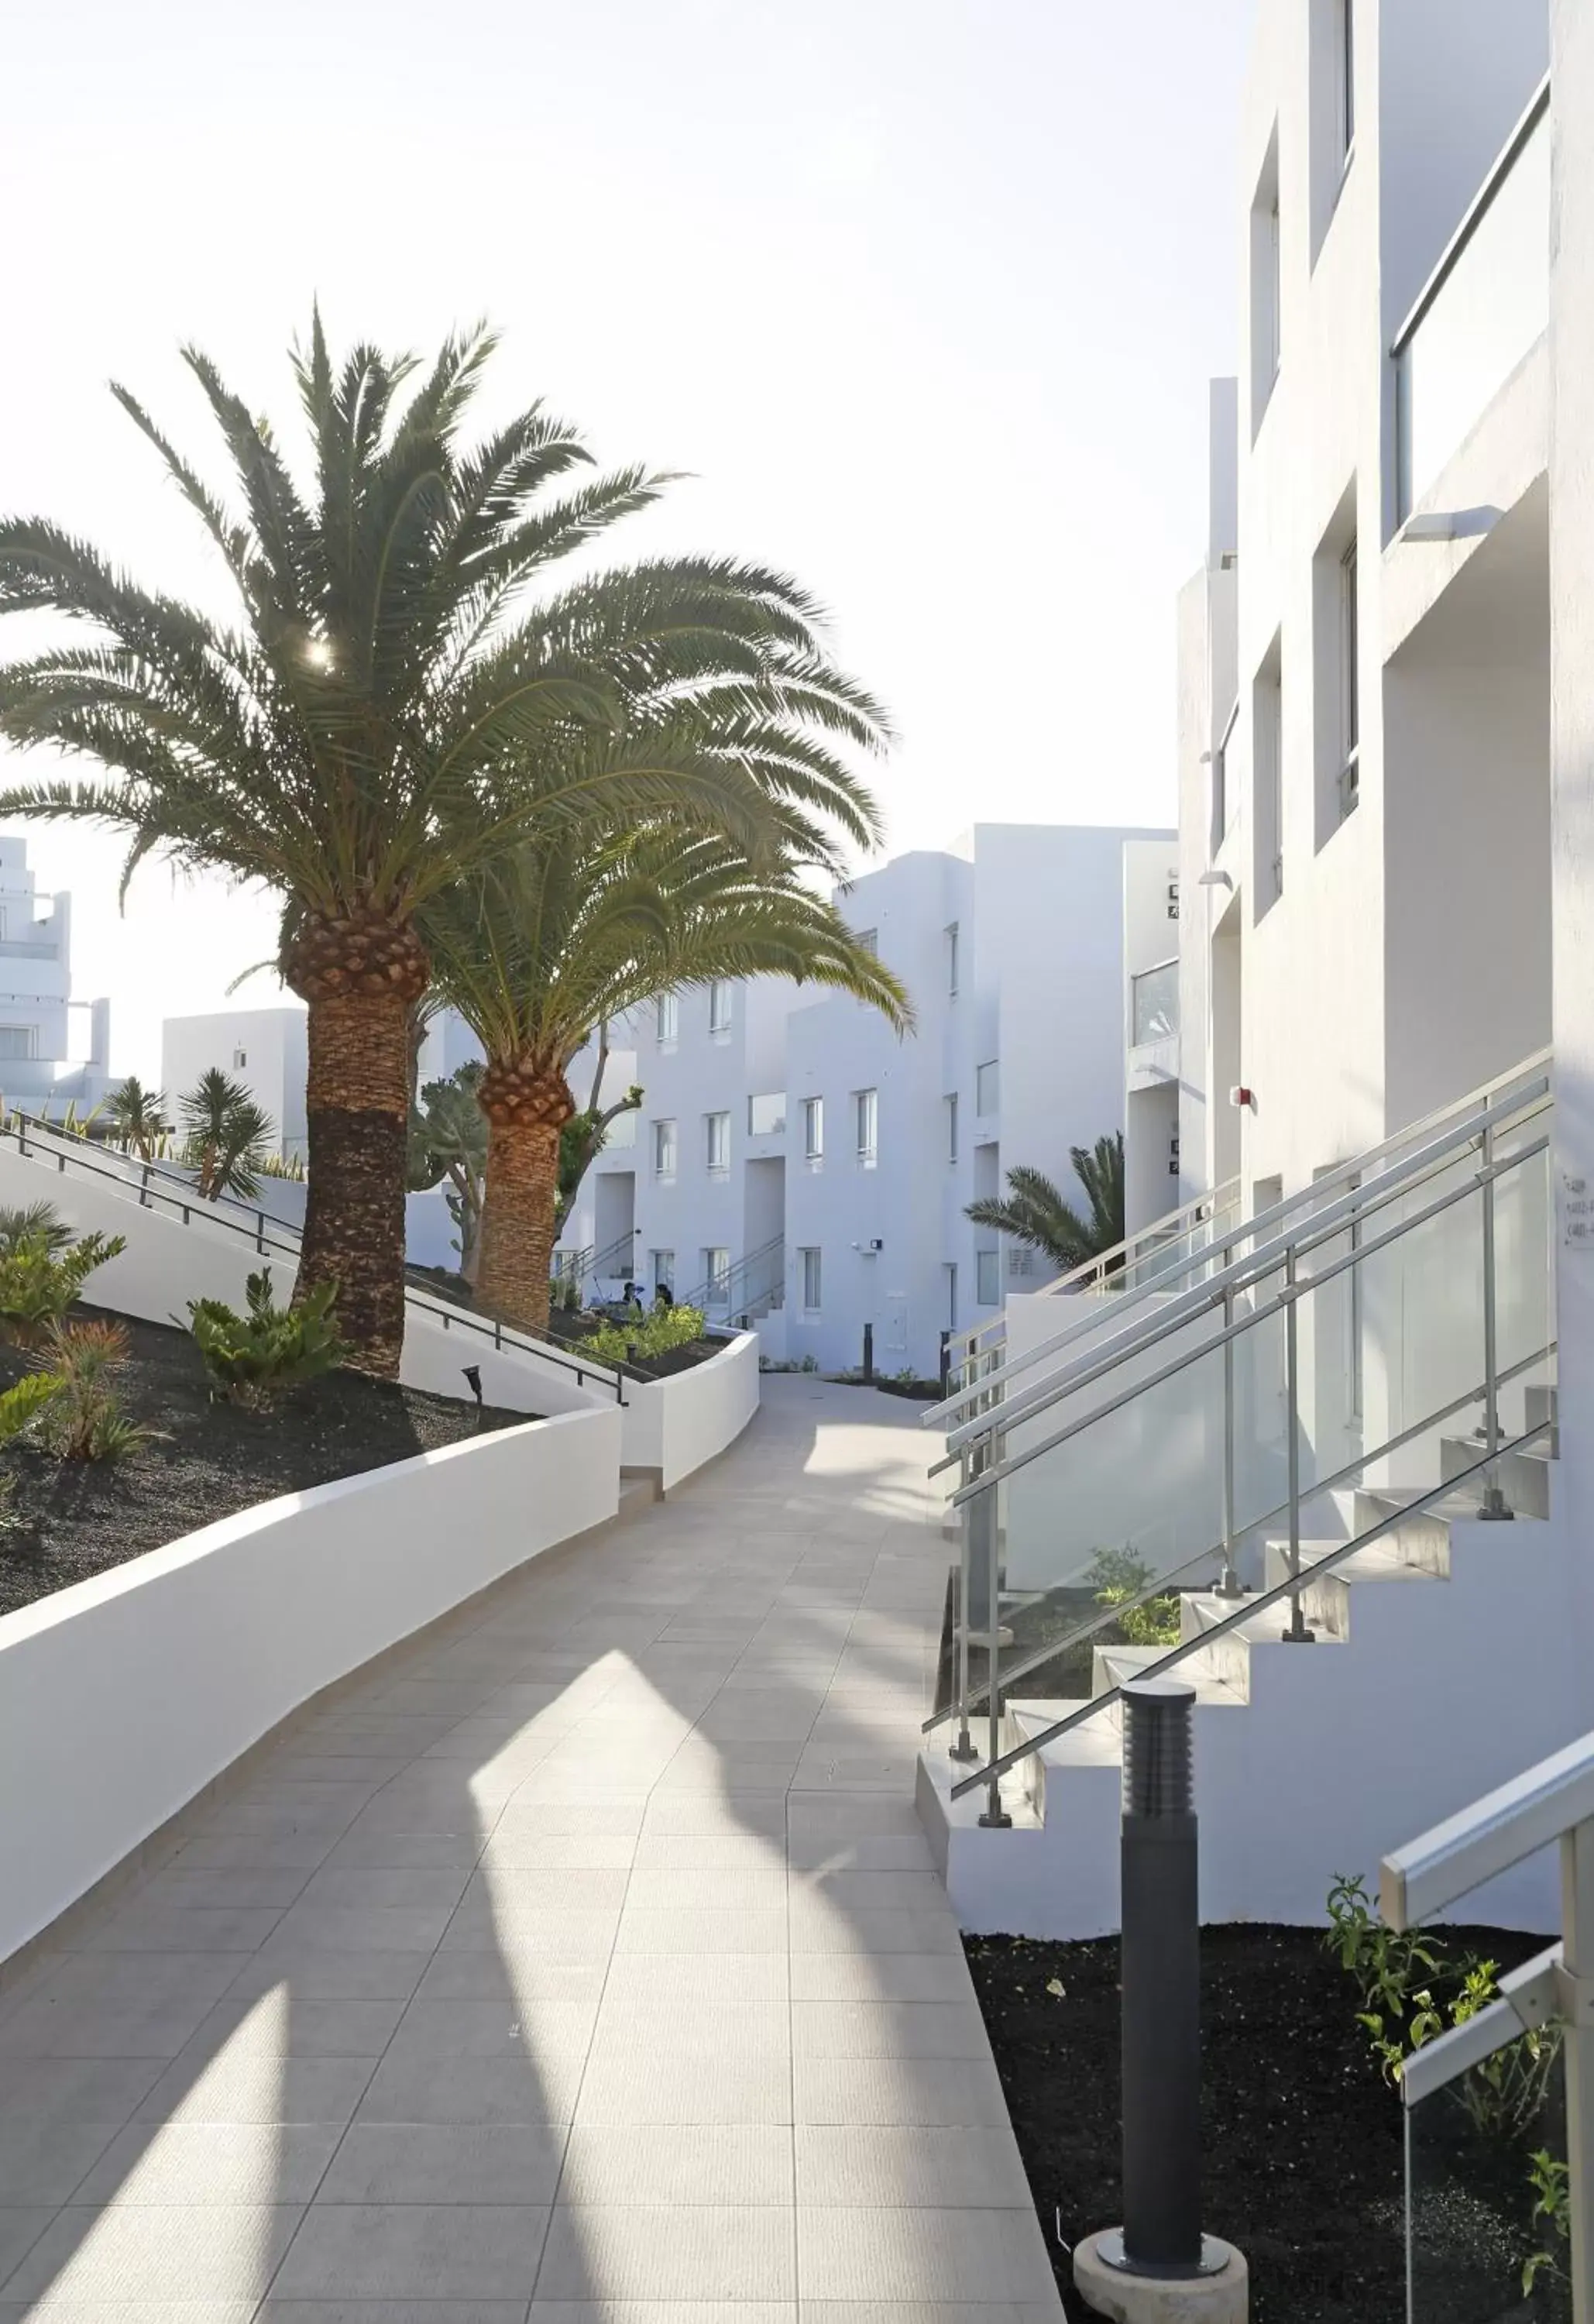 Area and facilities in Aequora Lanzarote Suites